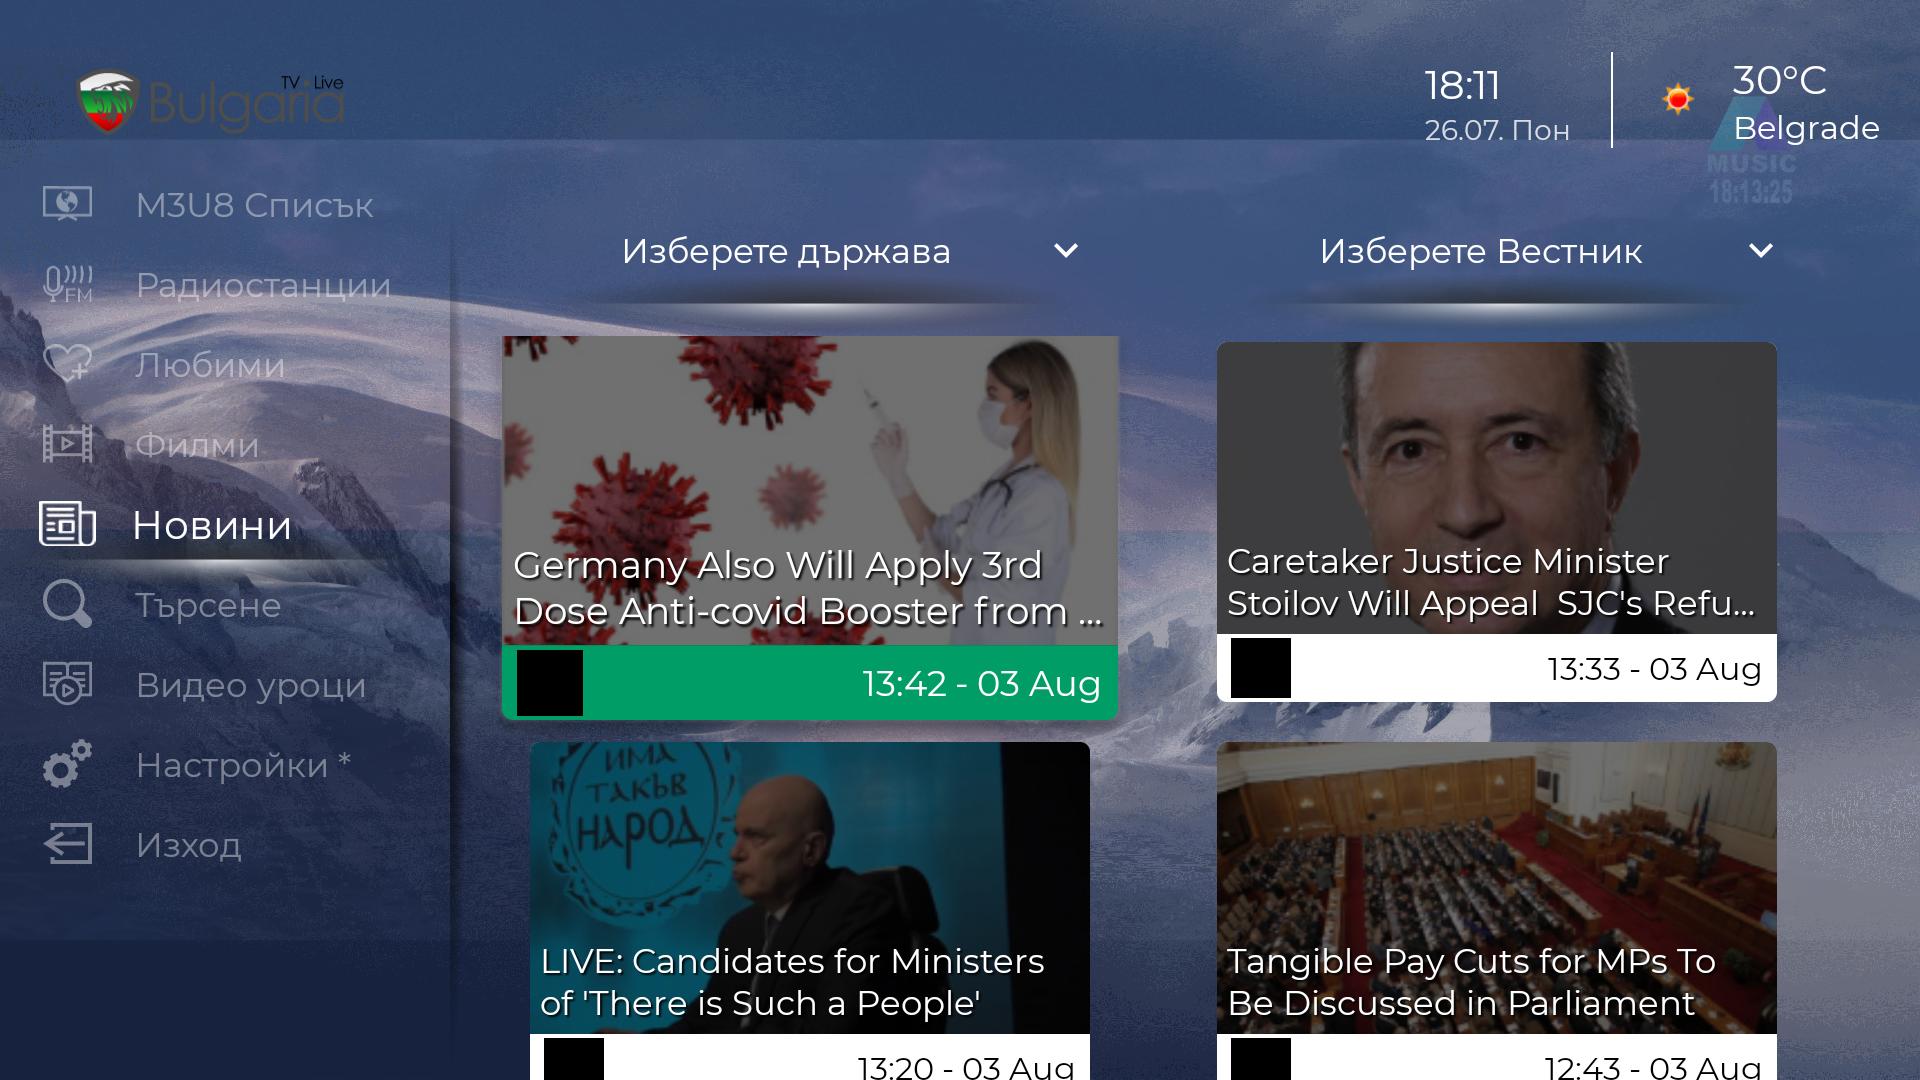 Bulgaria Live 1.2.04 Screenshot 24